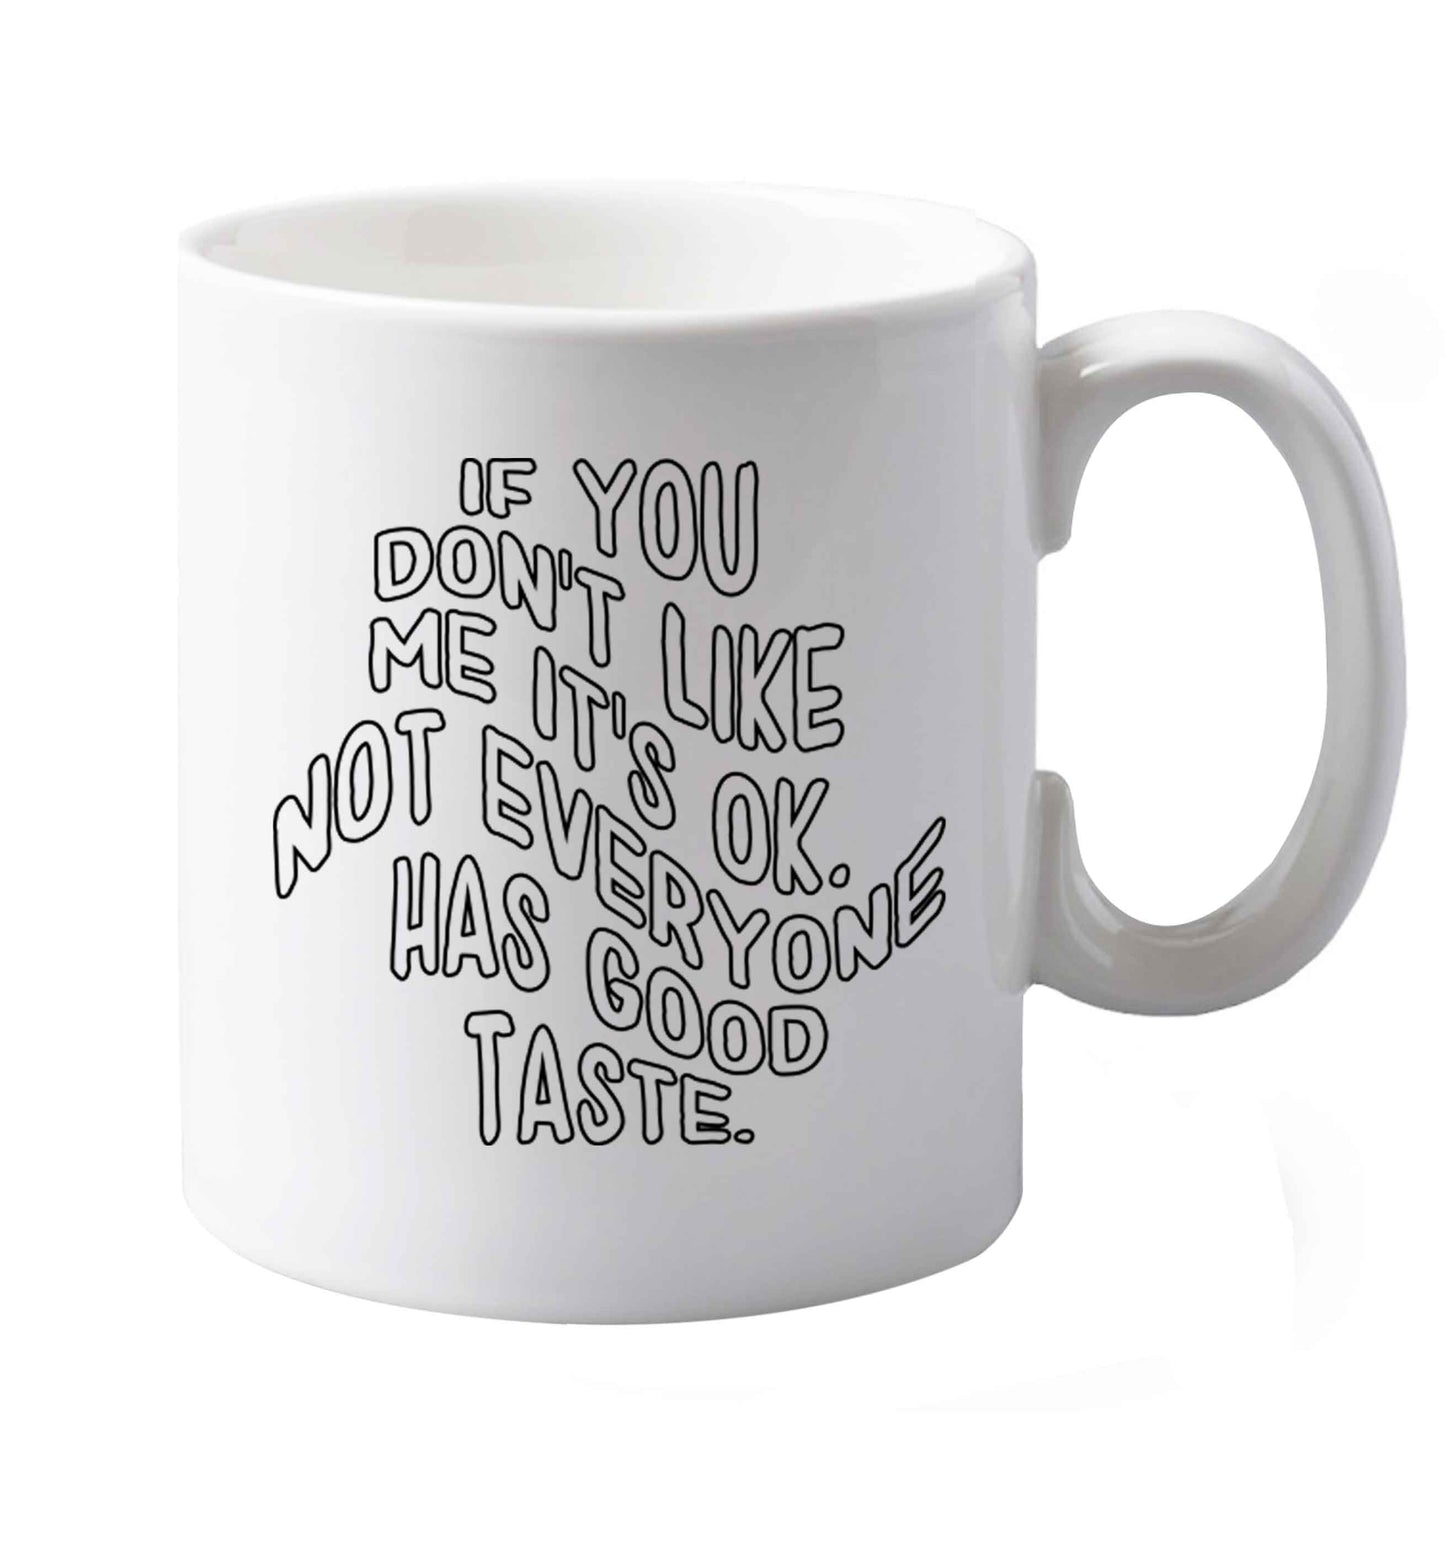 10 oz If you don't like me it's ok not everyone has good taste  ceramic mug both sides